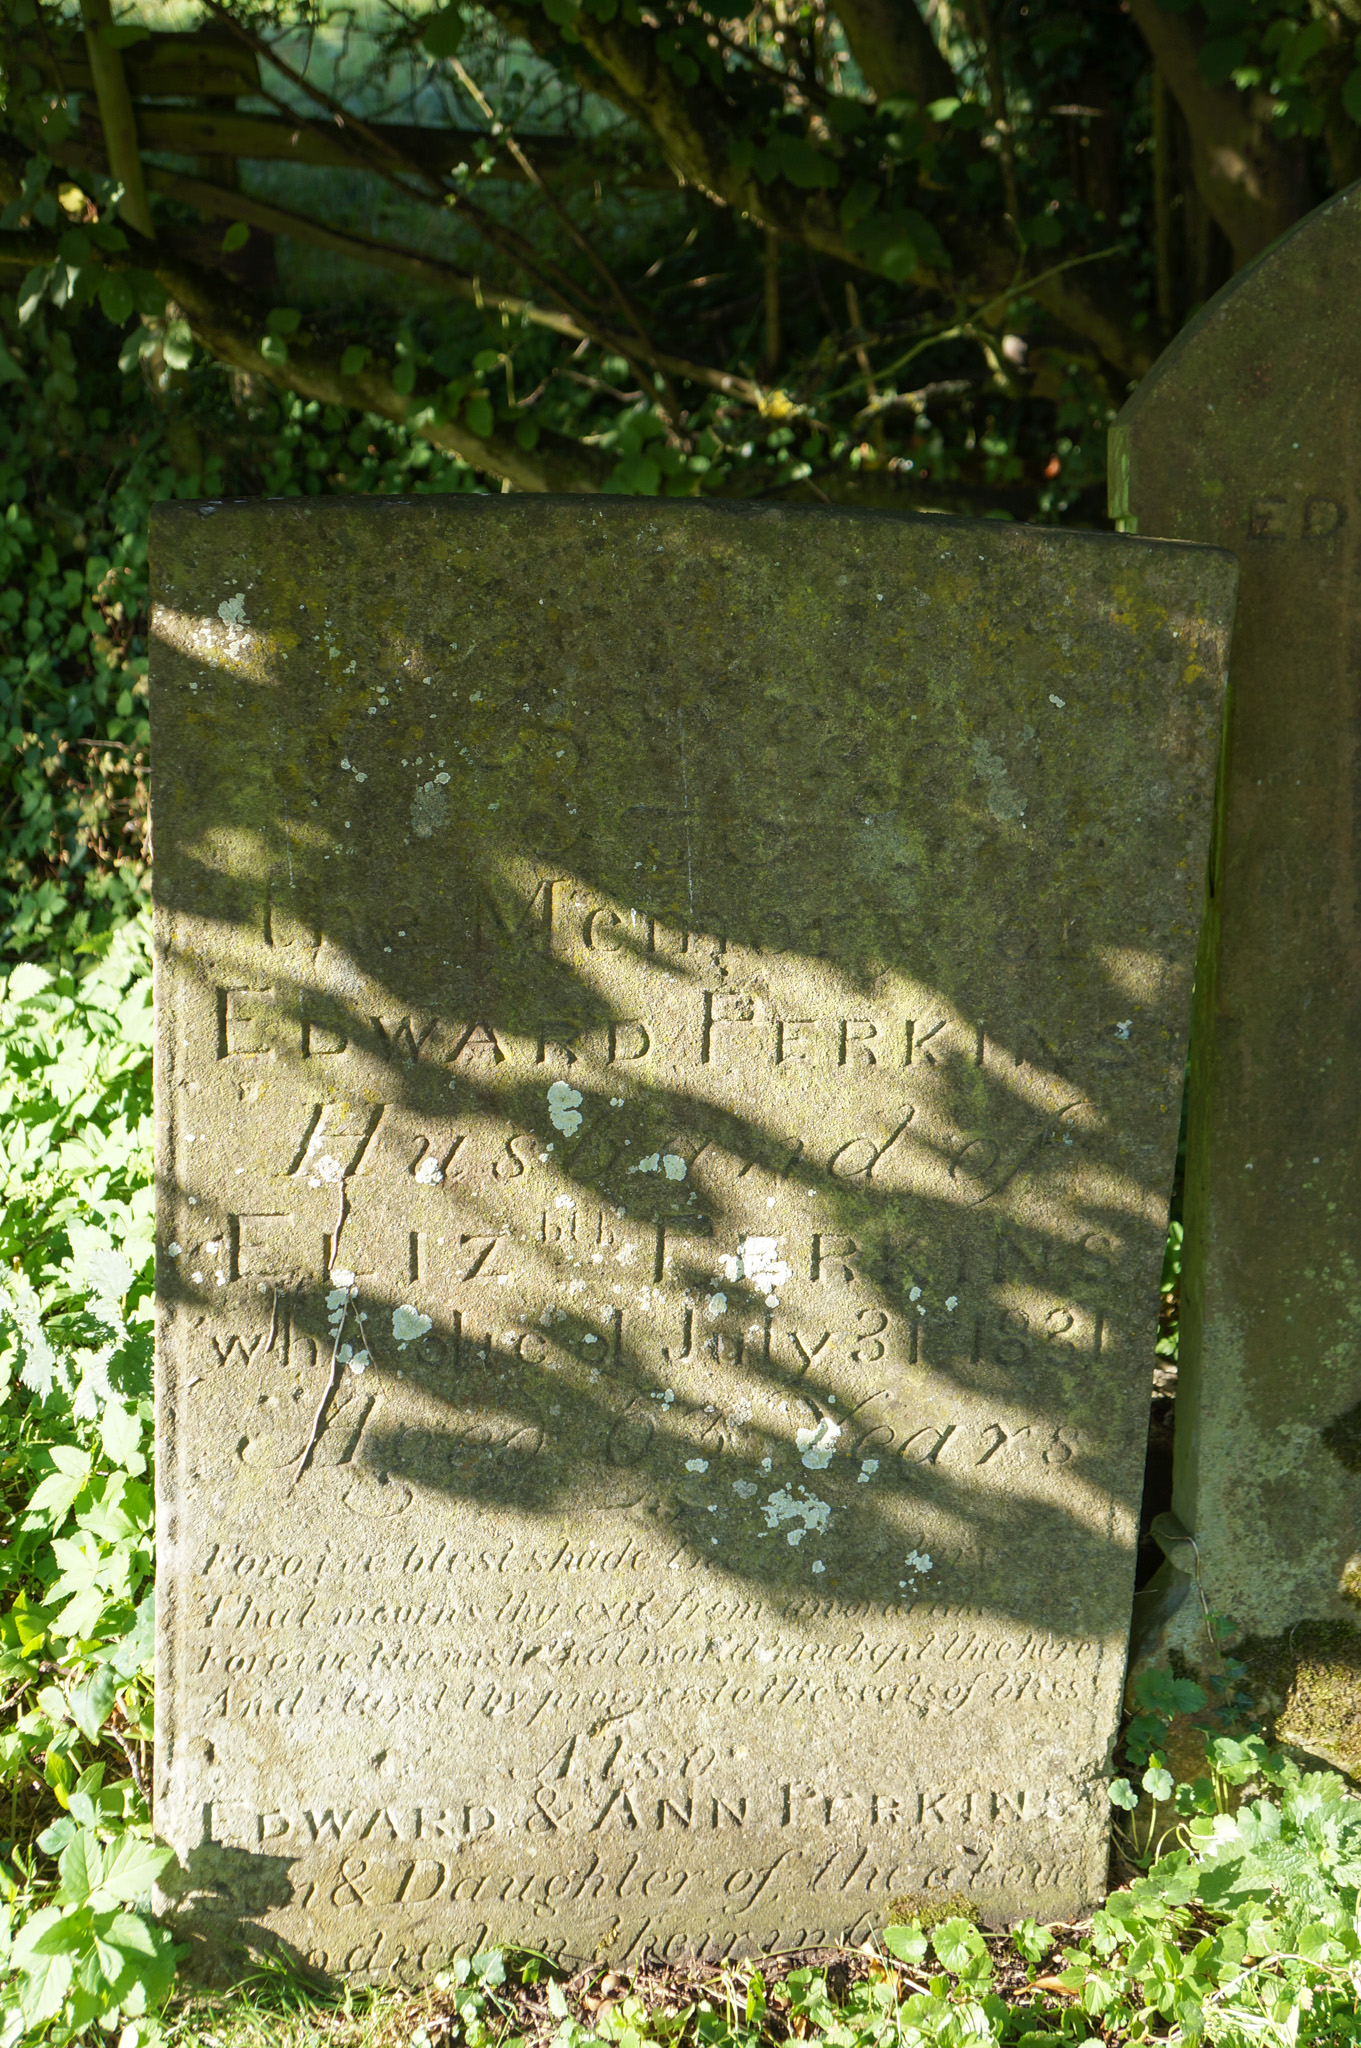 Perkins family gravestone